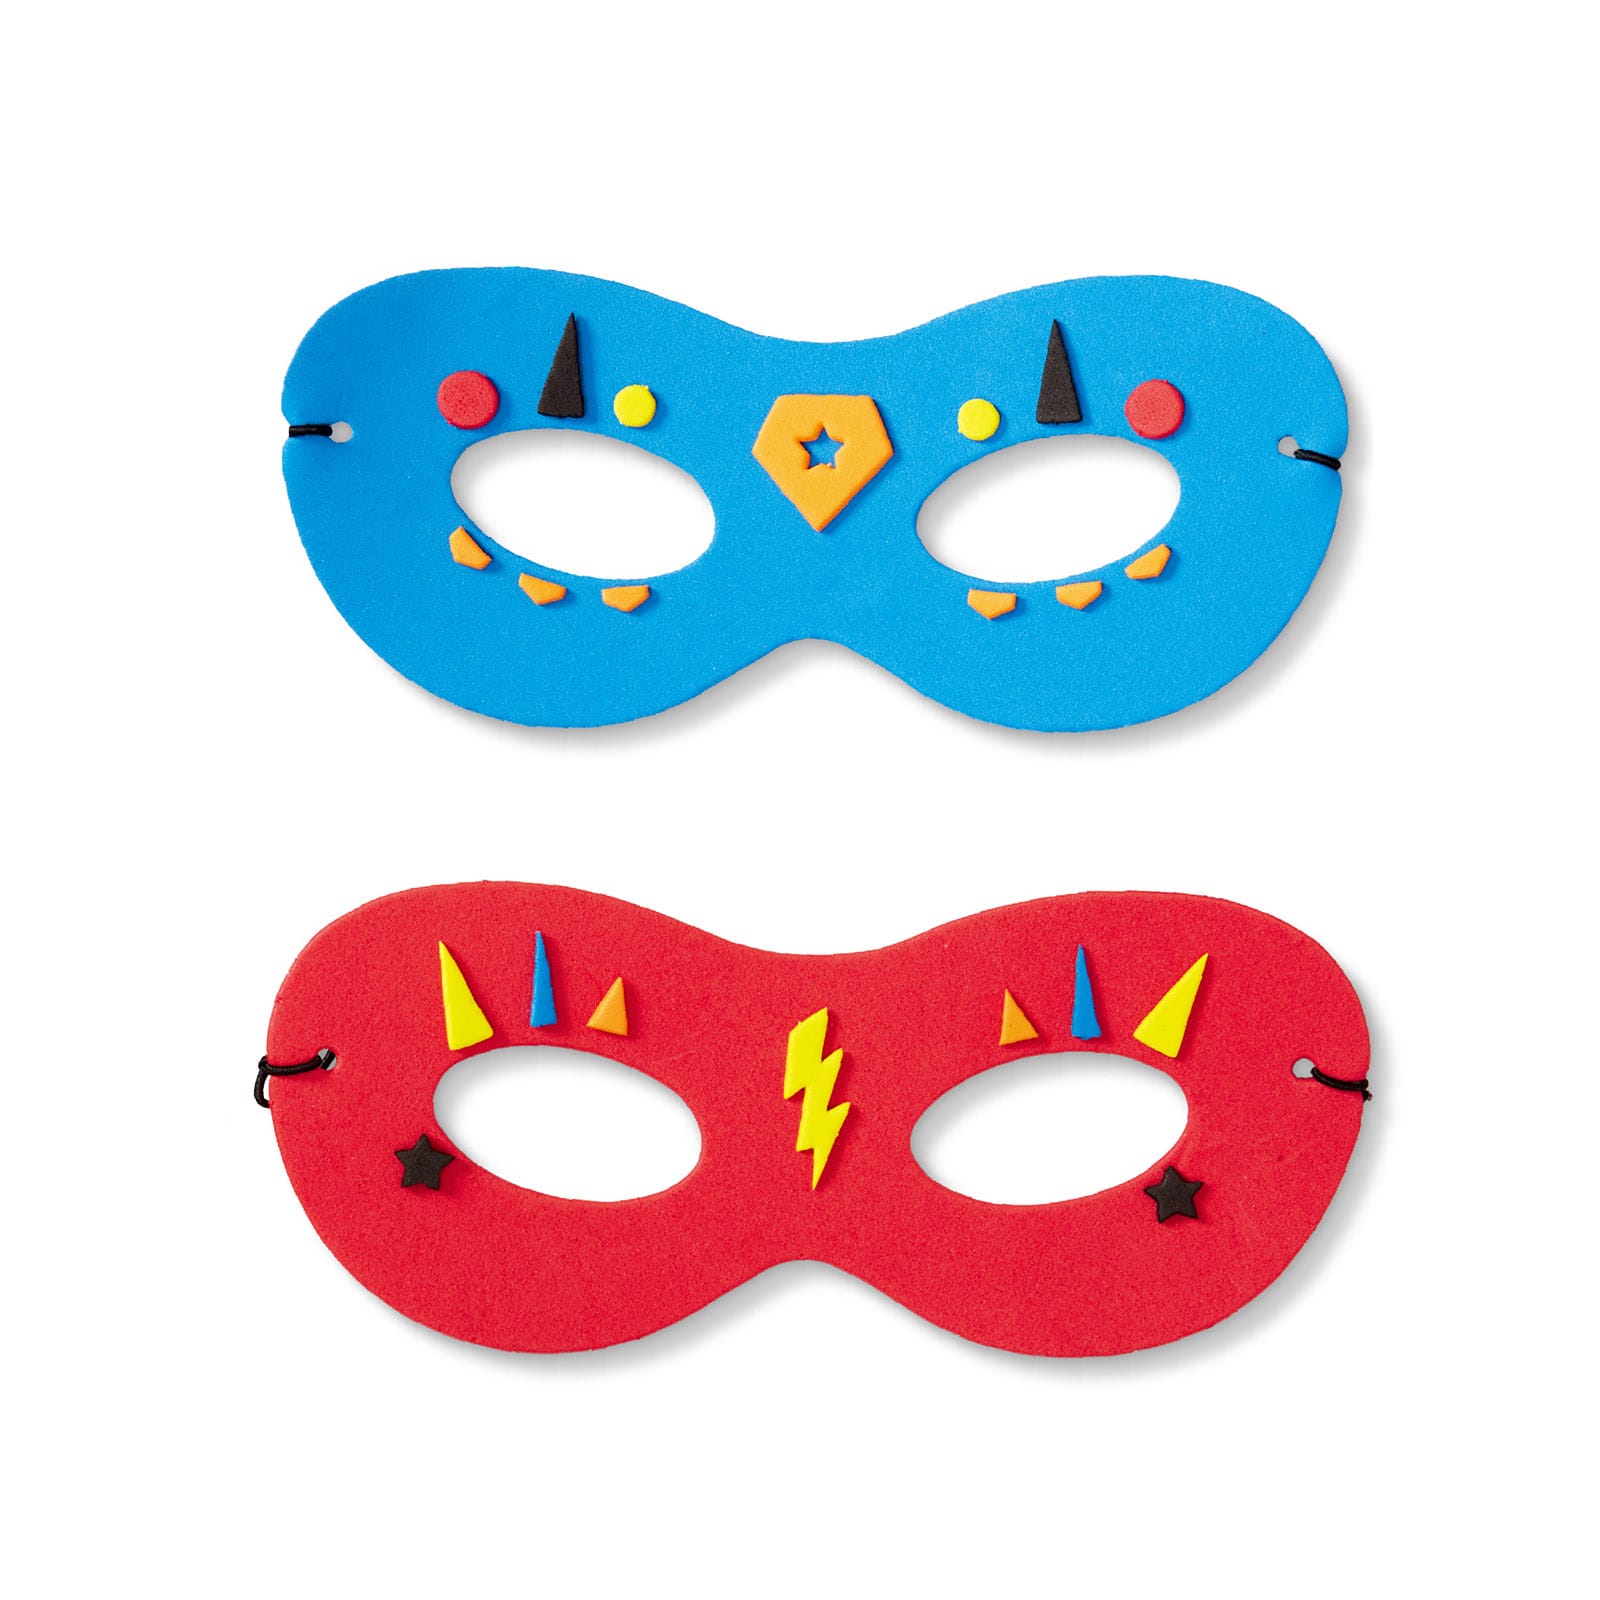 Foam Superhero Masks U.S 24 Count Toy